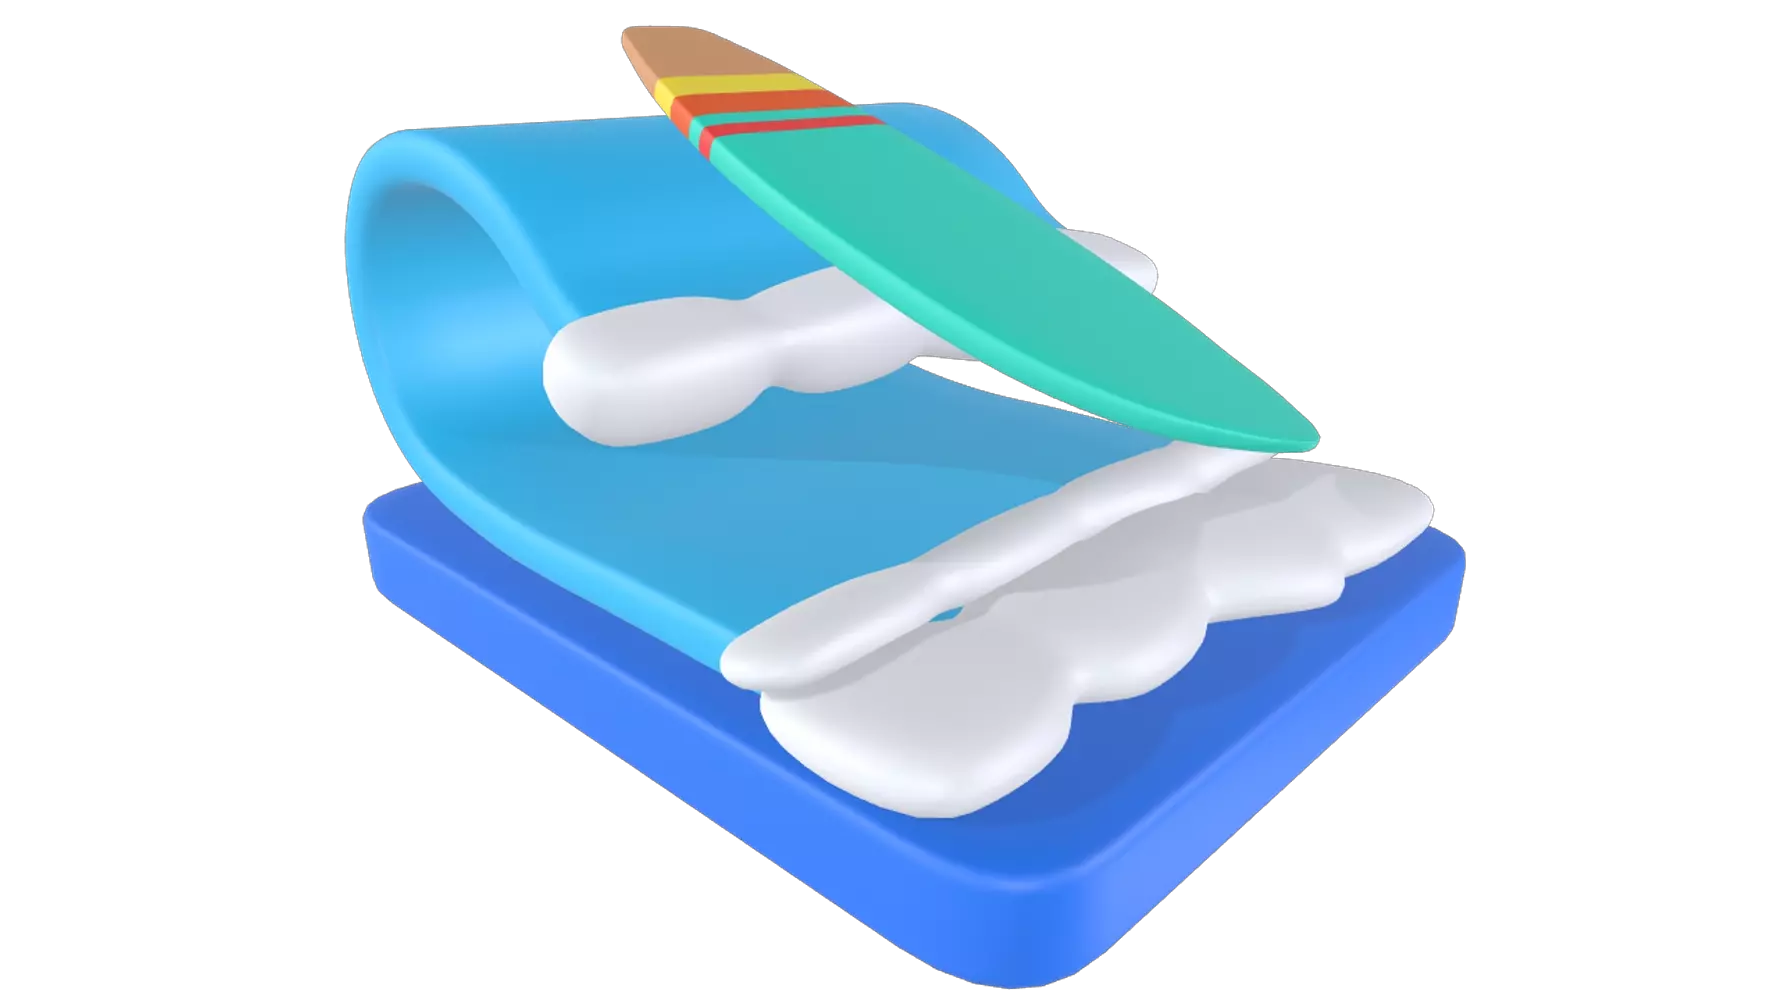 Surfing 3D Graphic